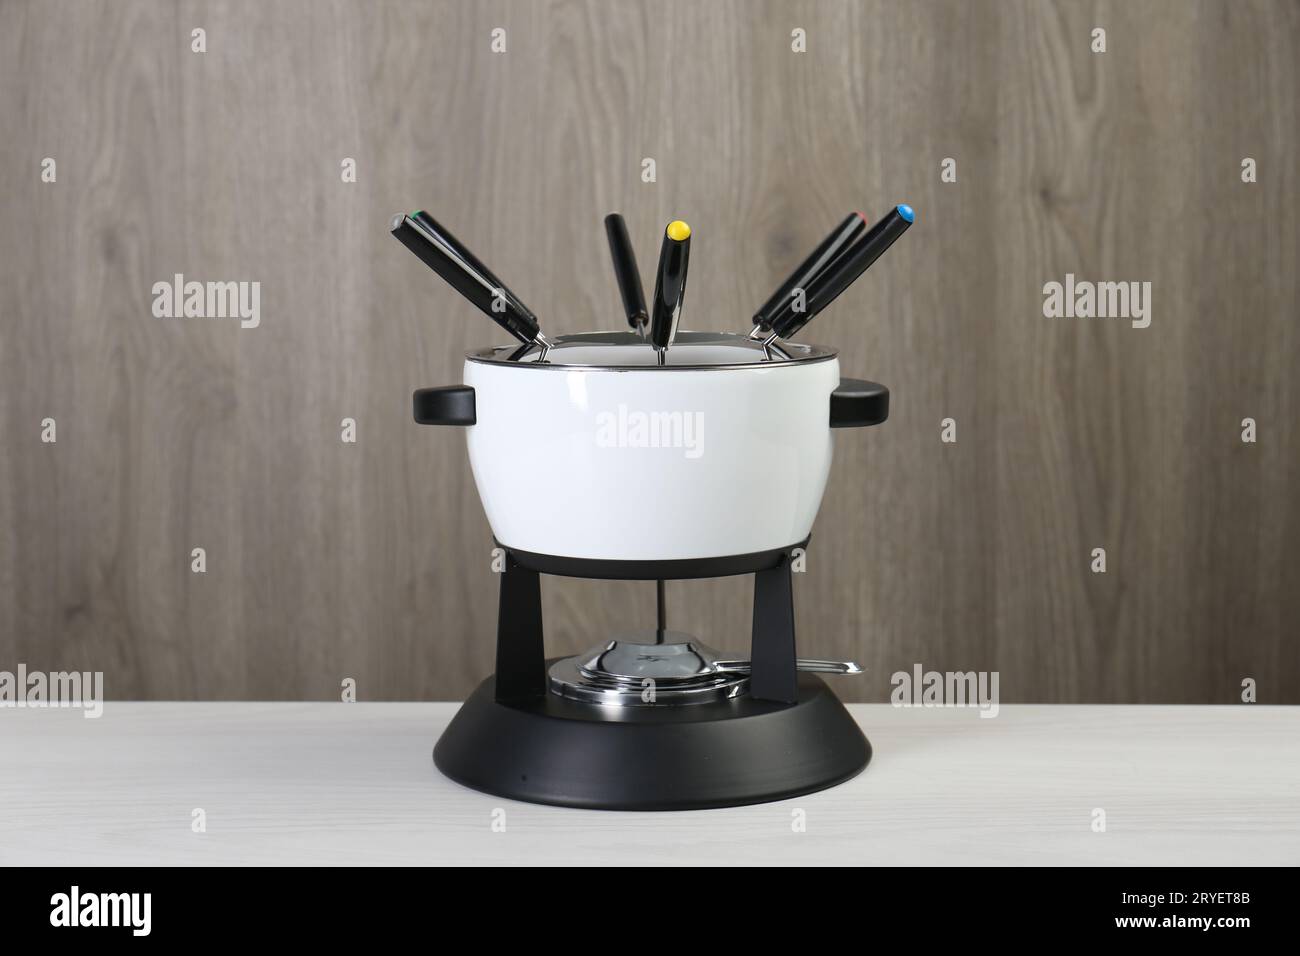 https://c8.alamy.com/comp/2RYET8B/fondue-set-on-white-wooden-table-kitchen-equipment-2RYET8B.jpg